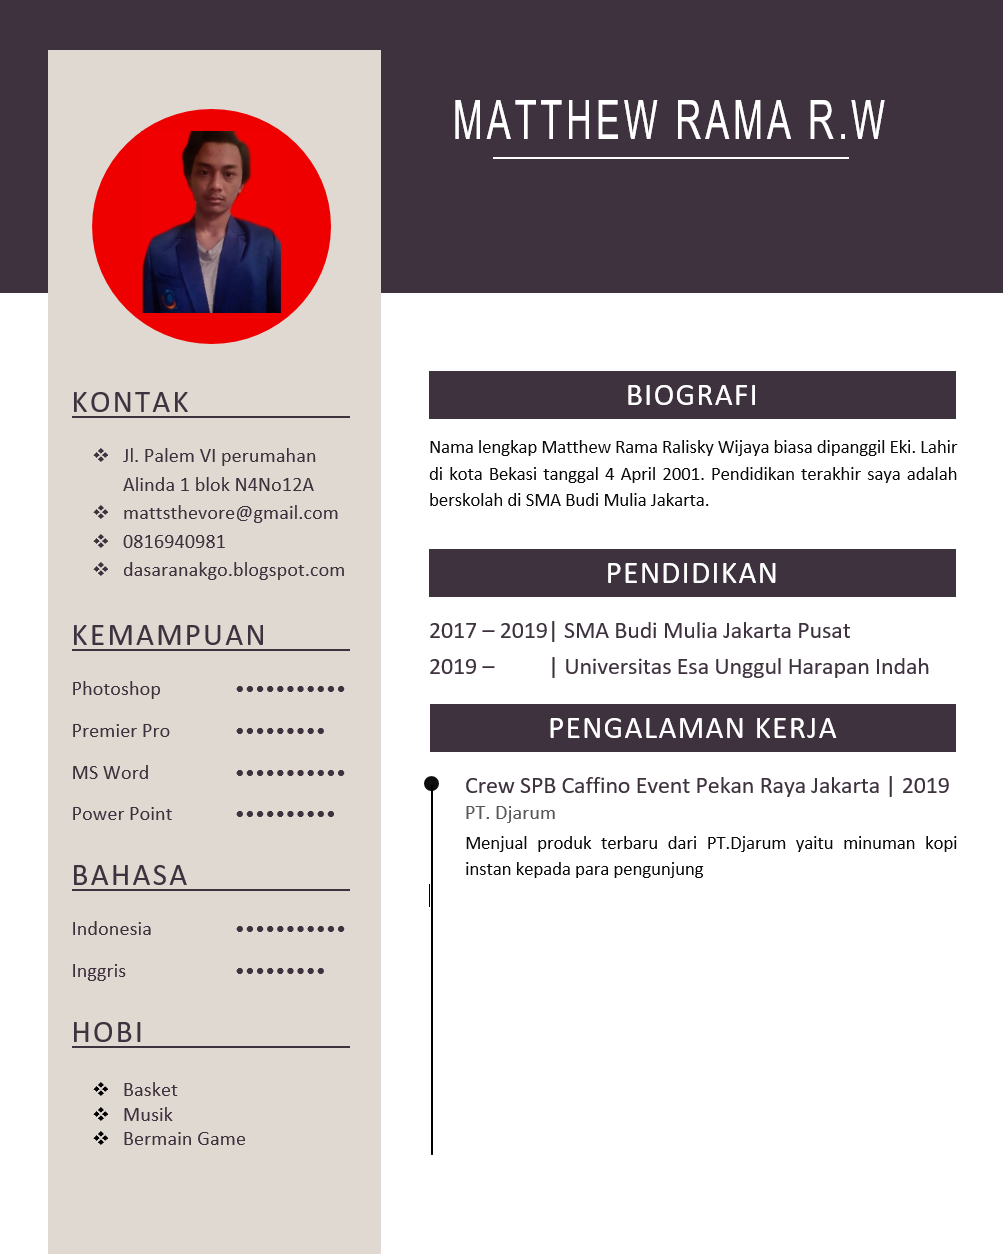 personal statement cv bahasa indonesia